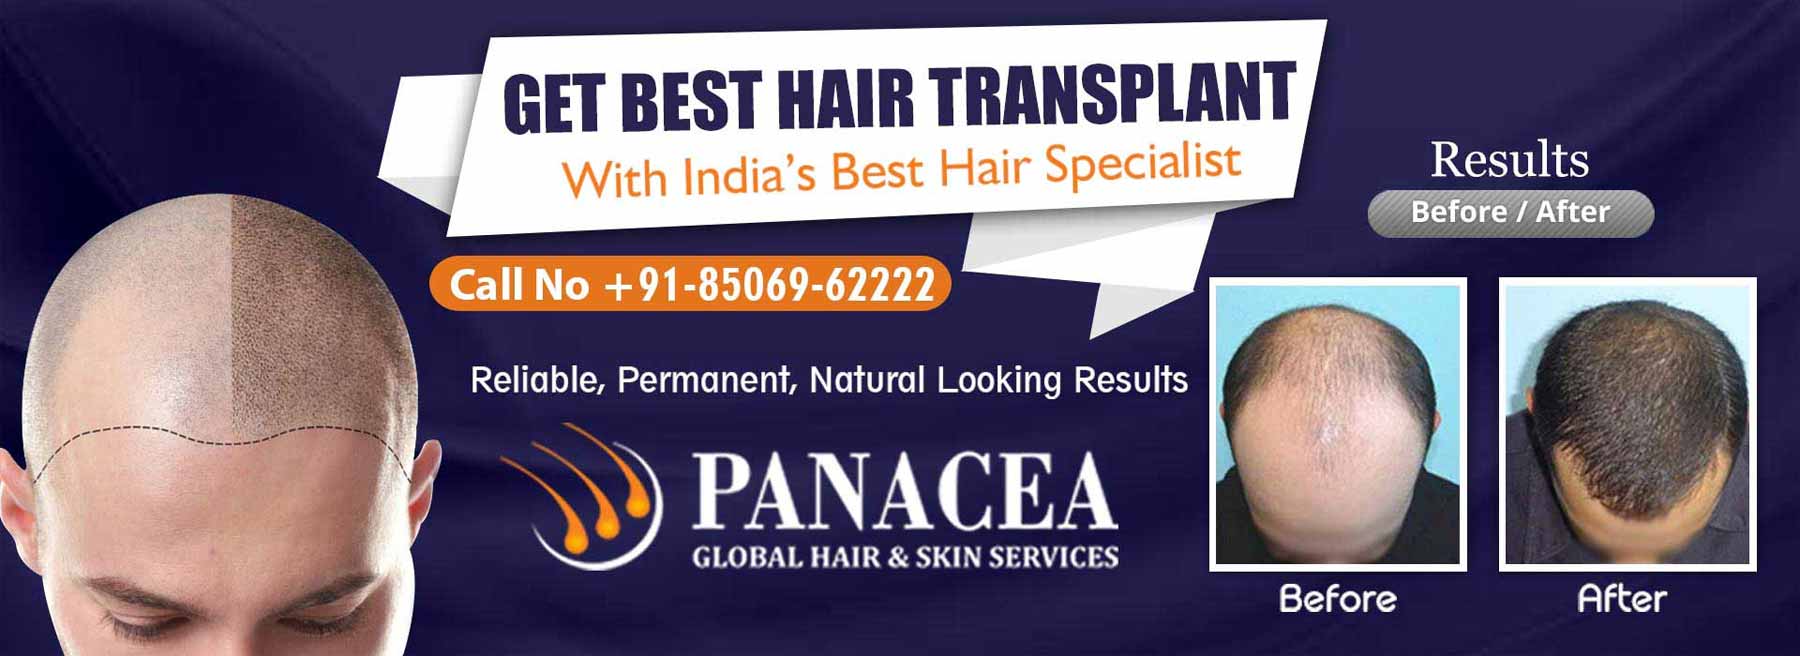 Get Best Hair Transplant - Panacea Global in New Friends Colony